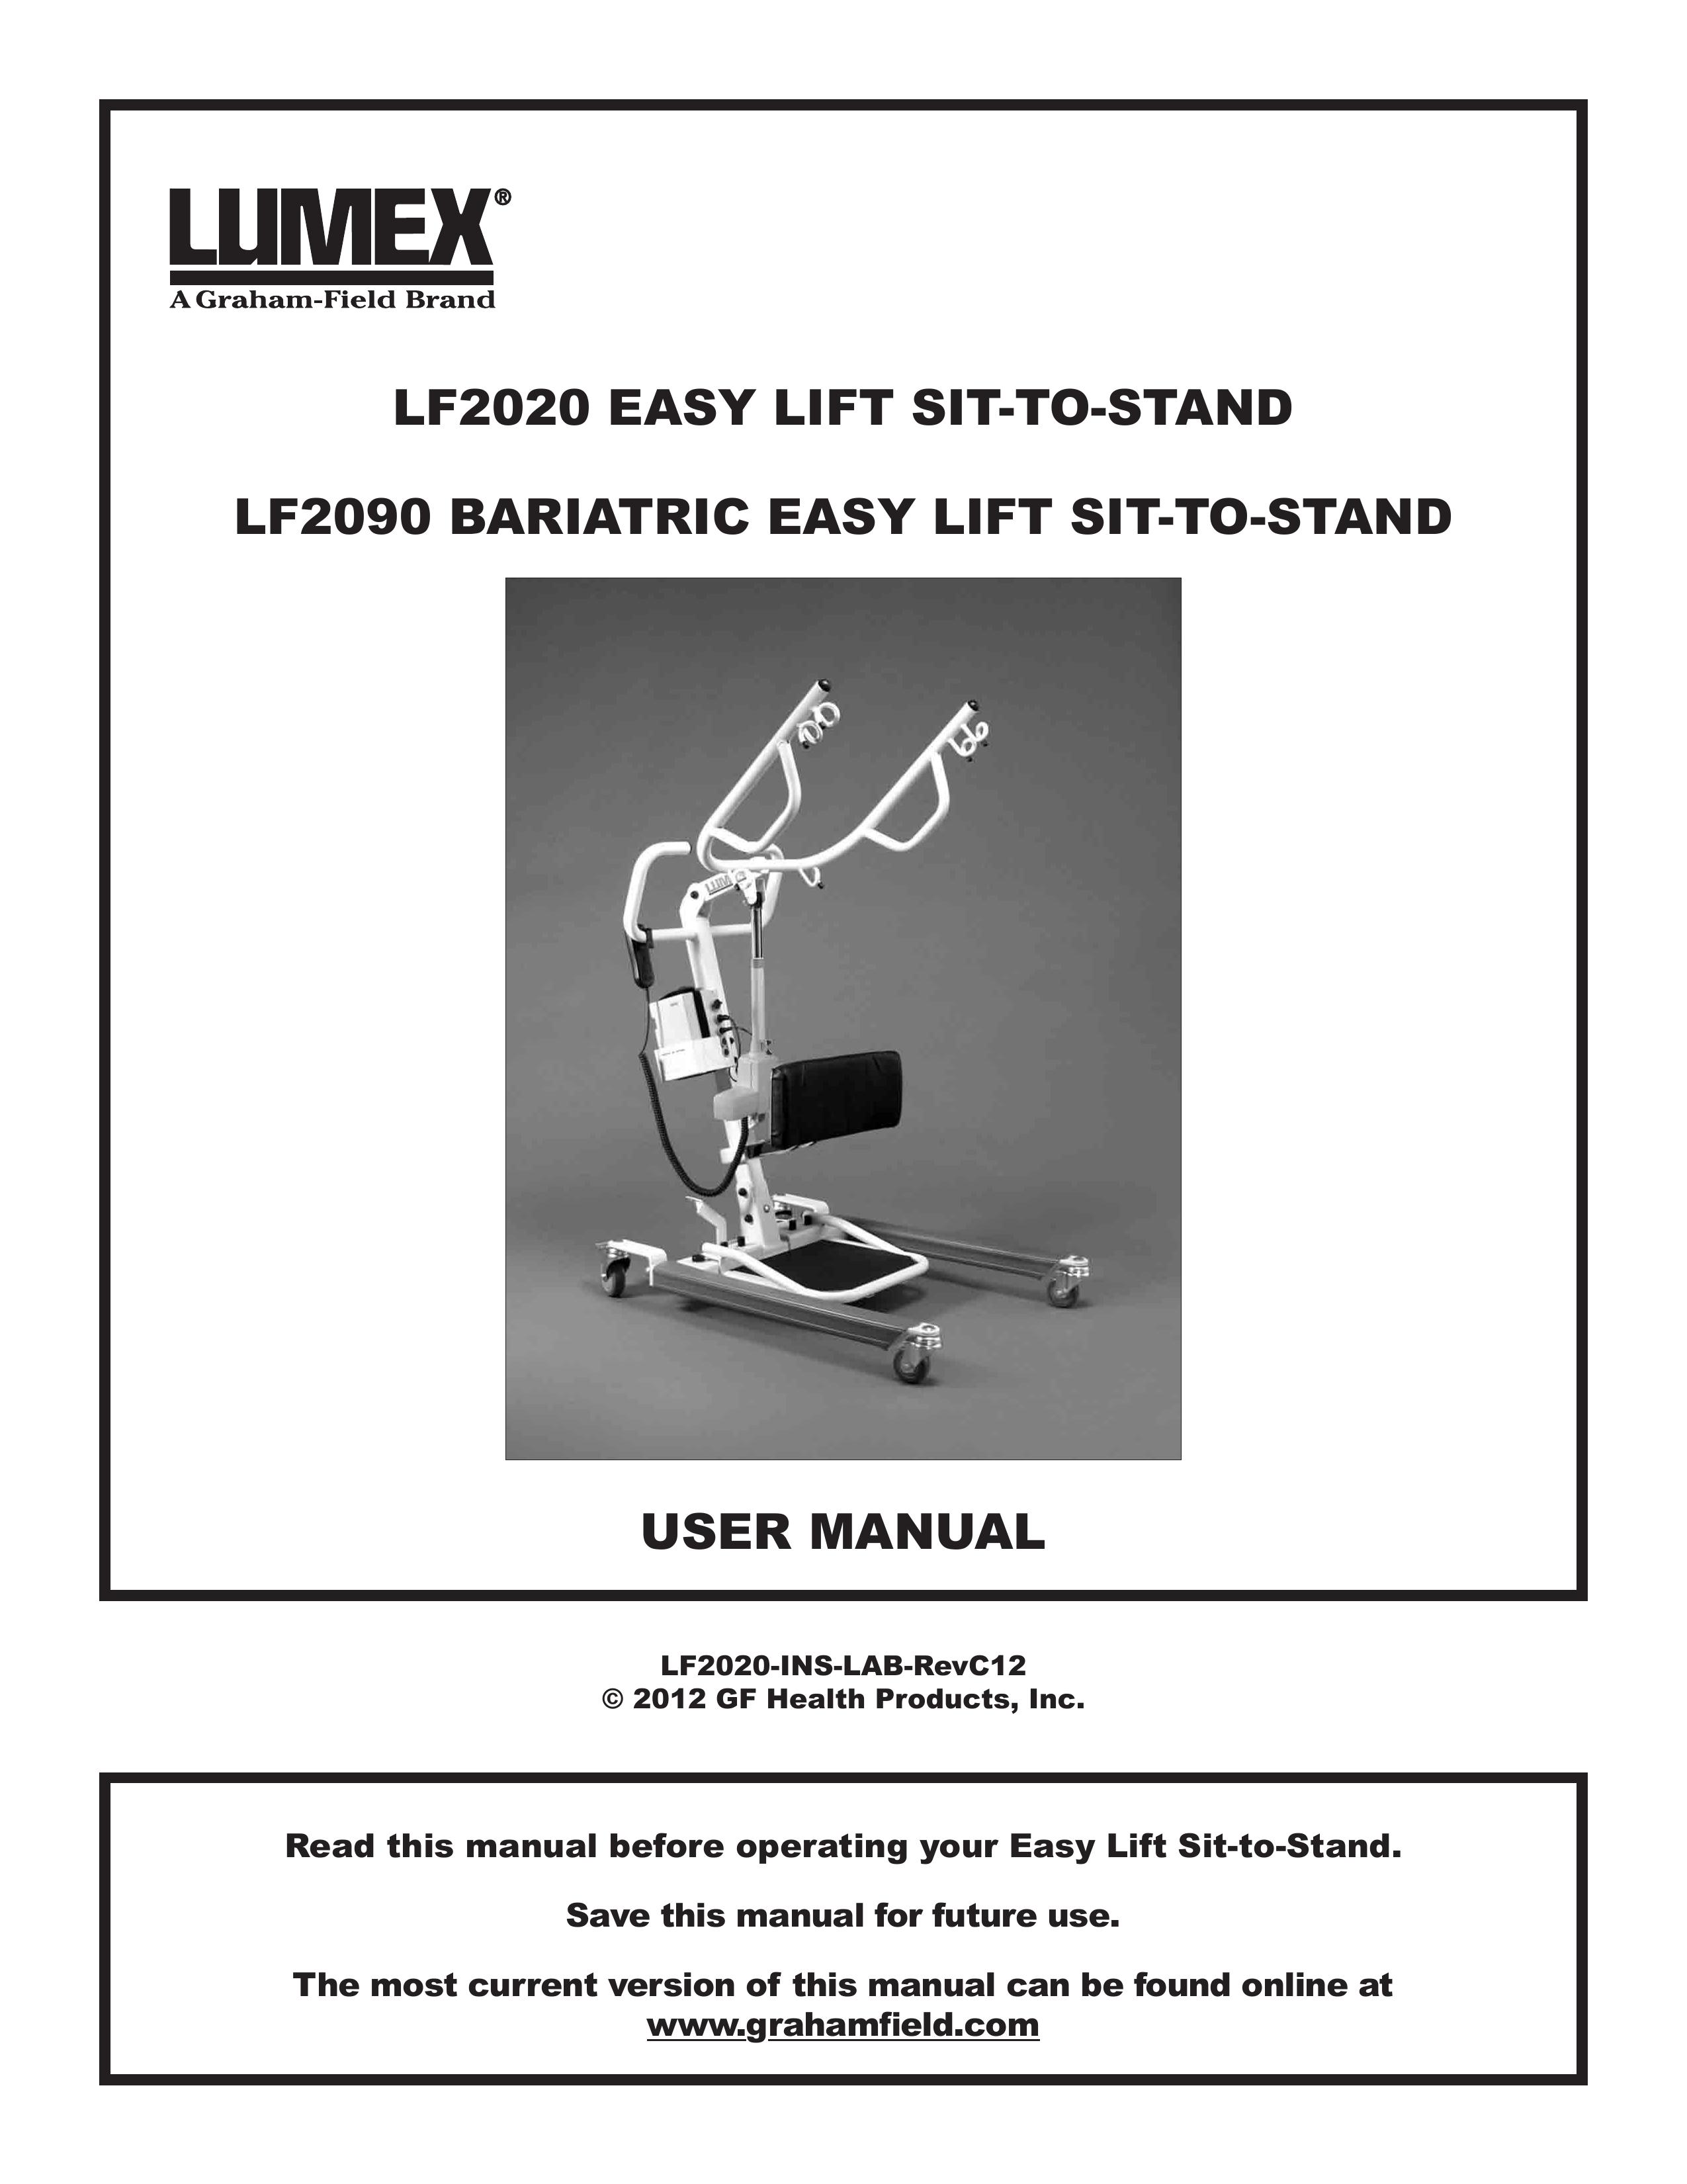 Graham Field LF2090 Personal Lift User Manual